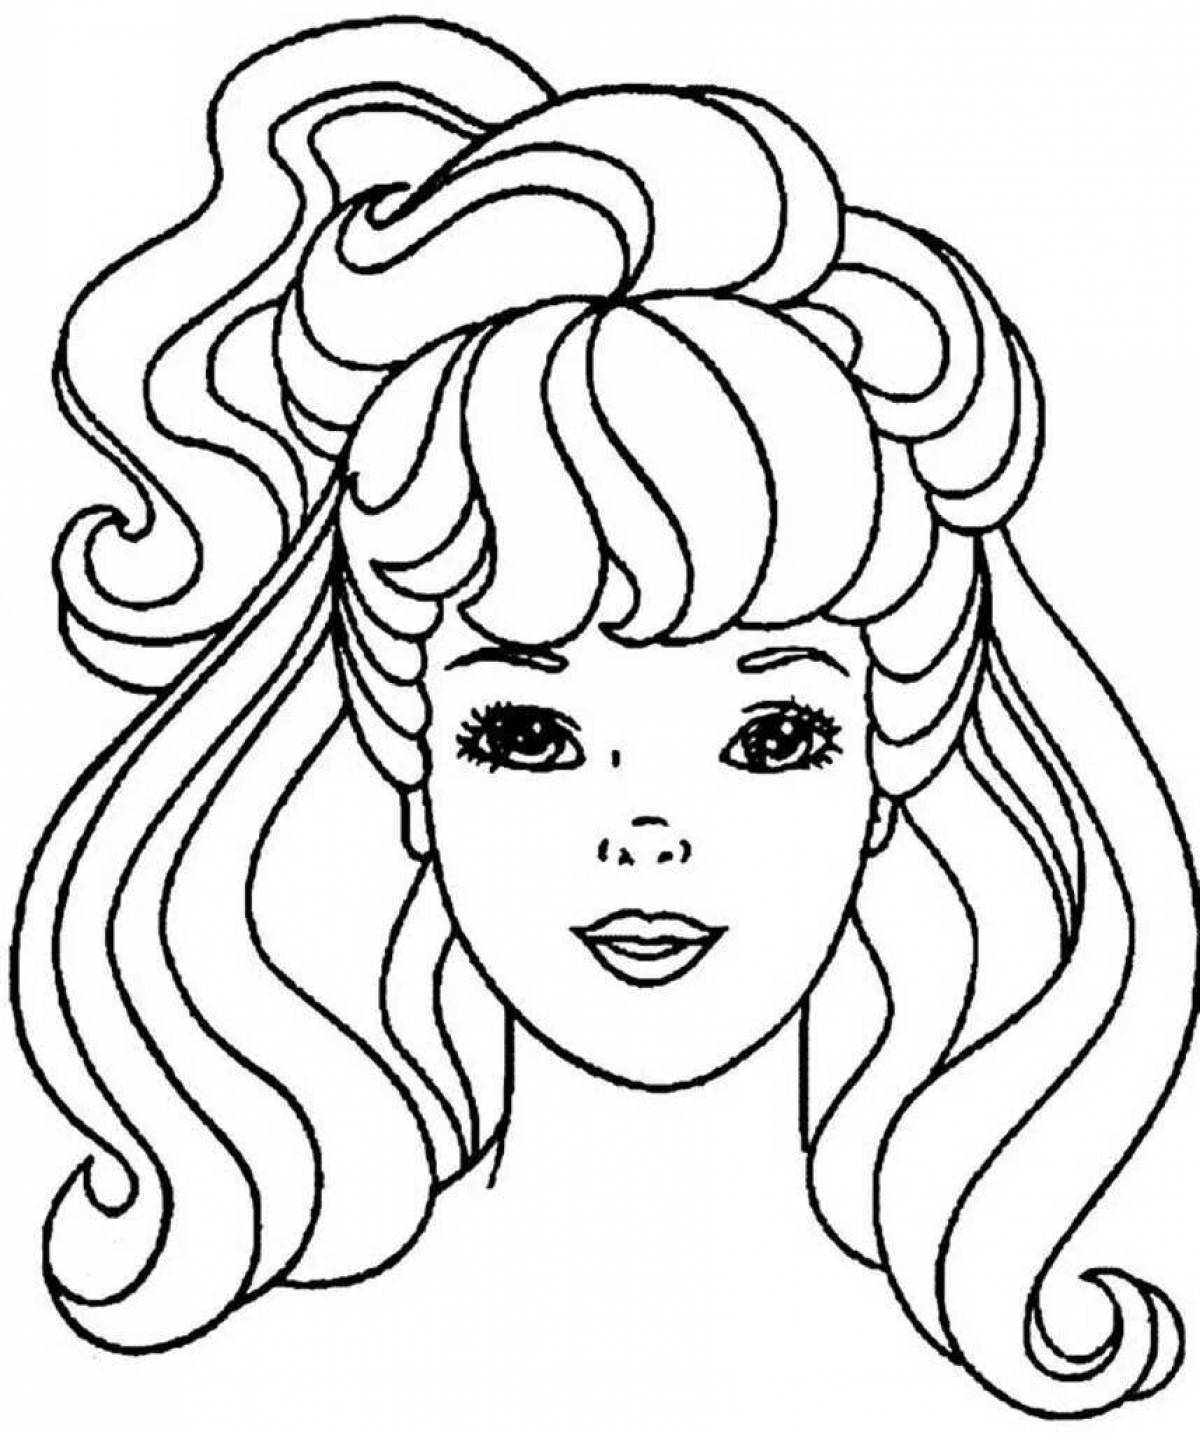 Раскраска лица. Раскраска прически. Раскраска девочка с волосами. Раскраски прически для девочек. Волосы раскраска для детей.